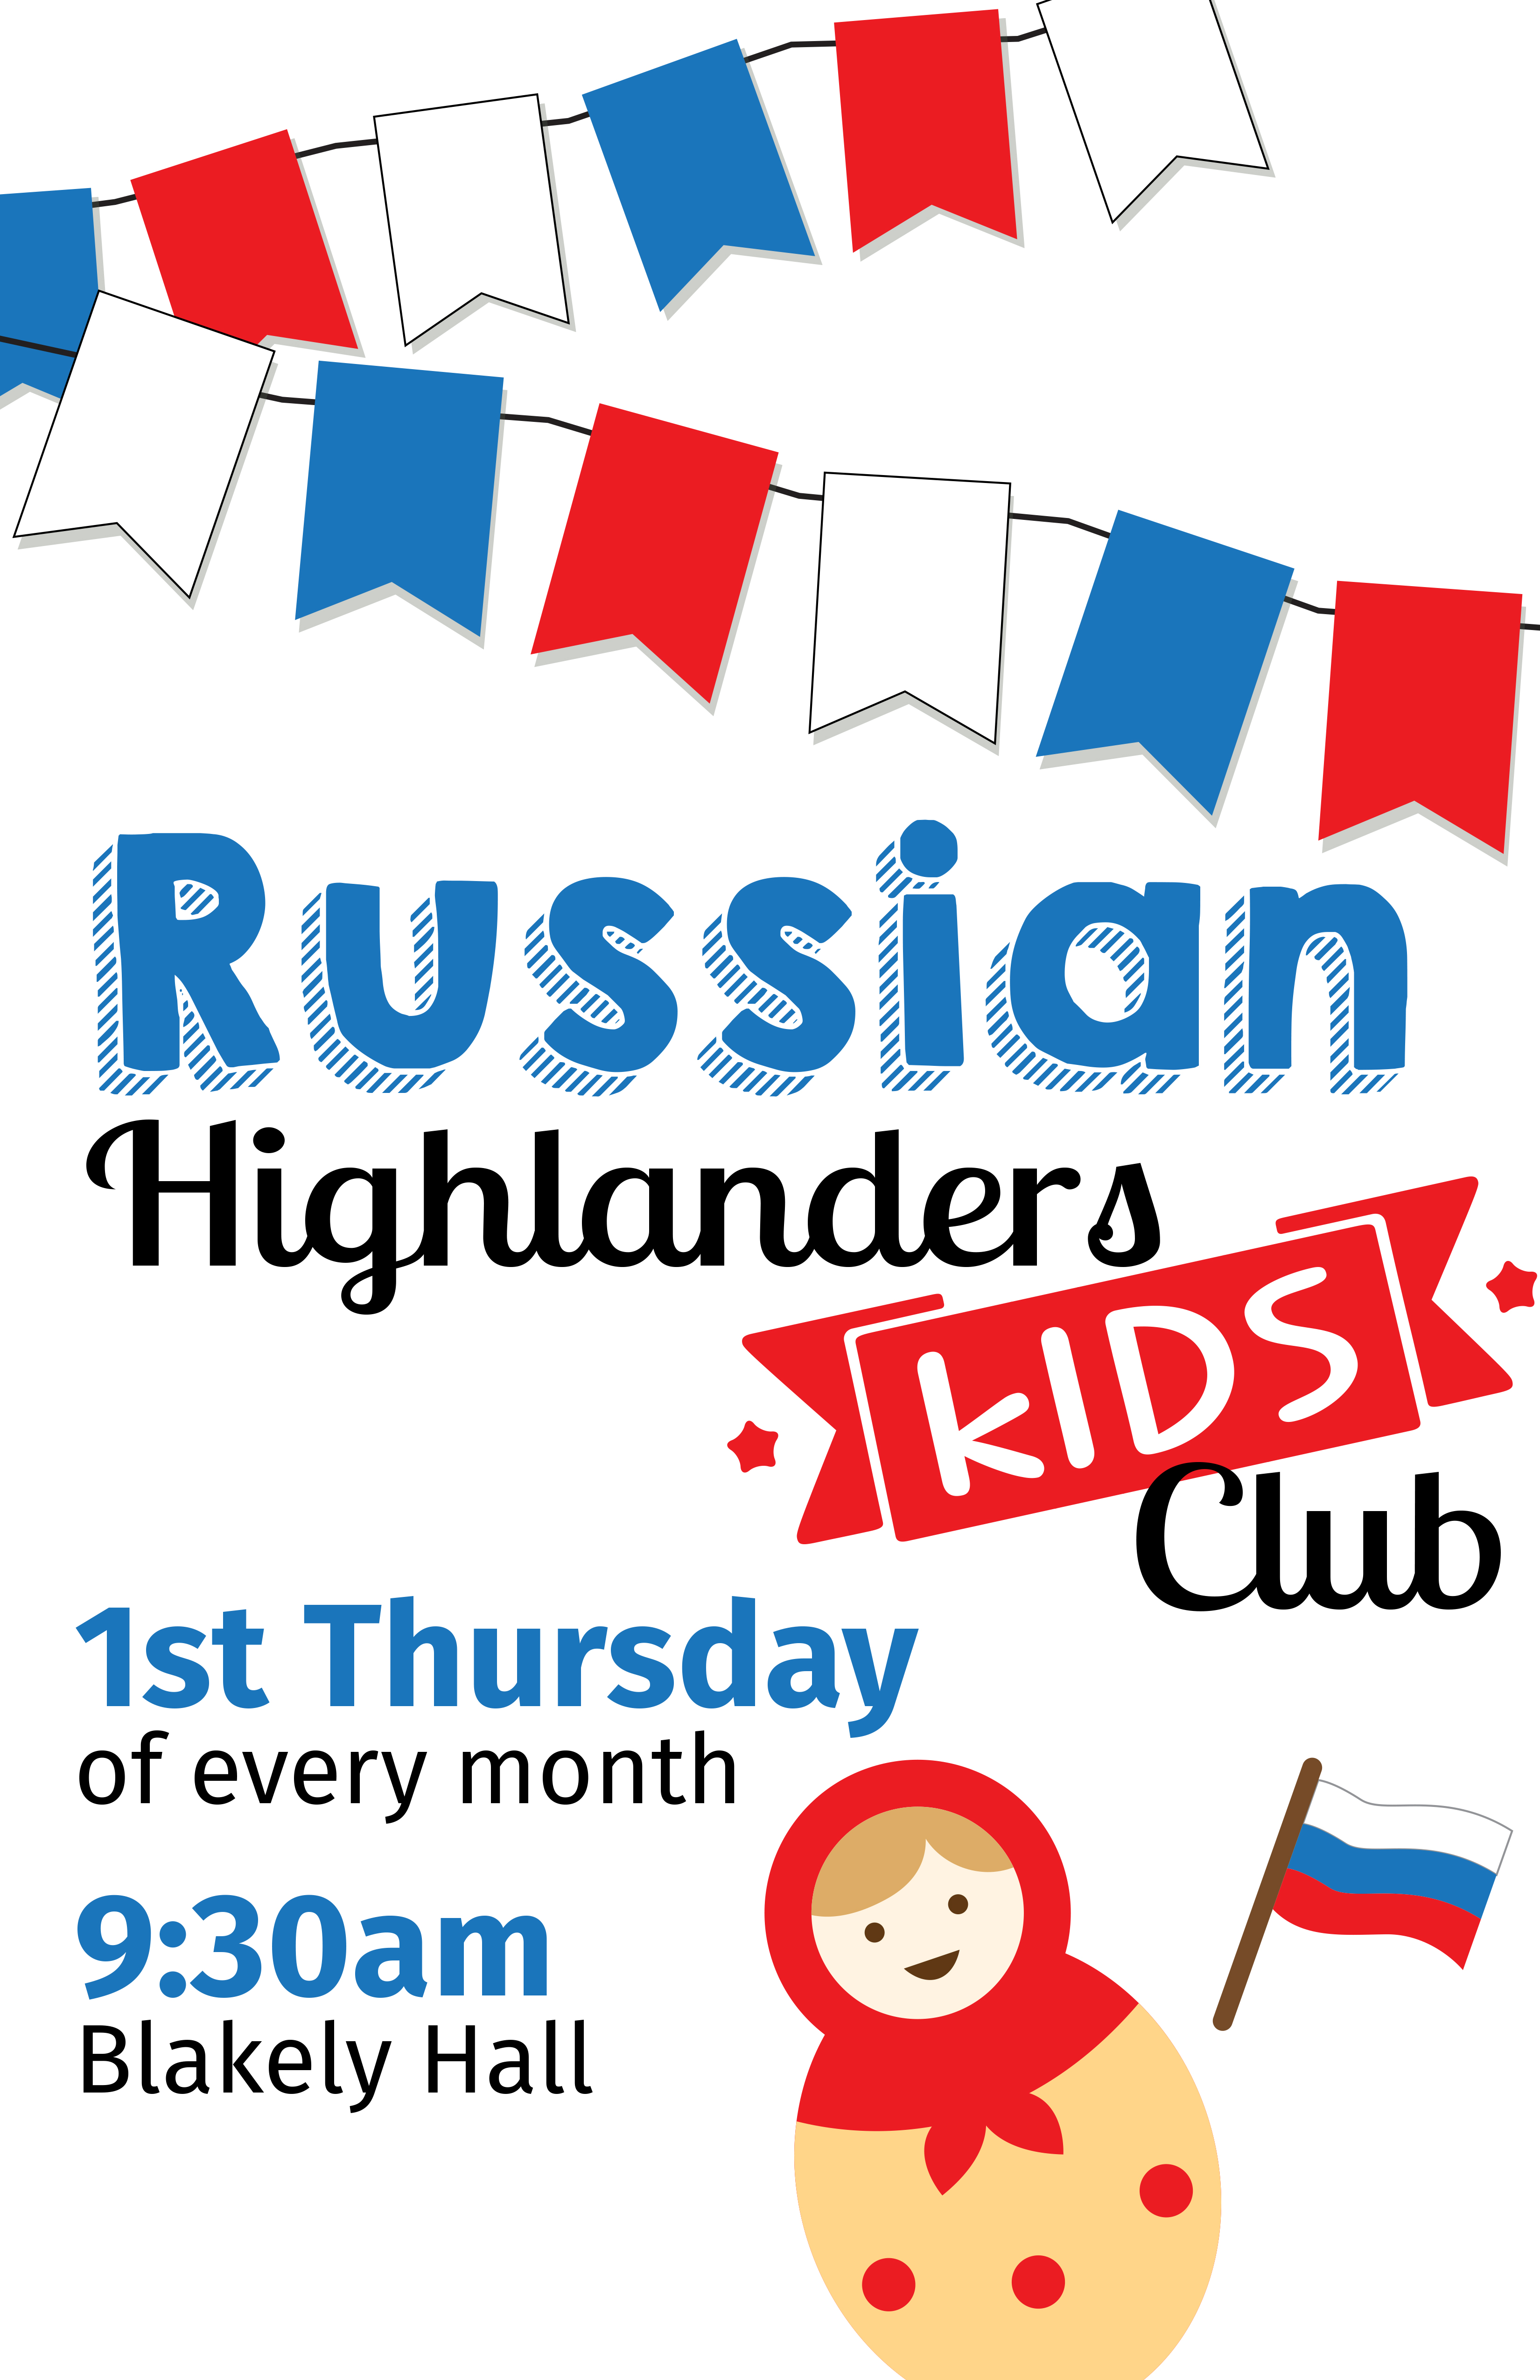 Russian Highlanders Kids Club Issaquah Highlands